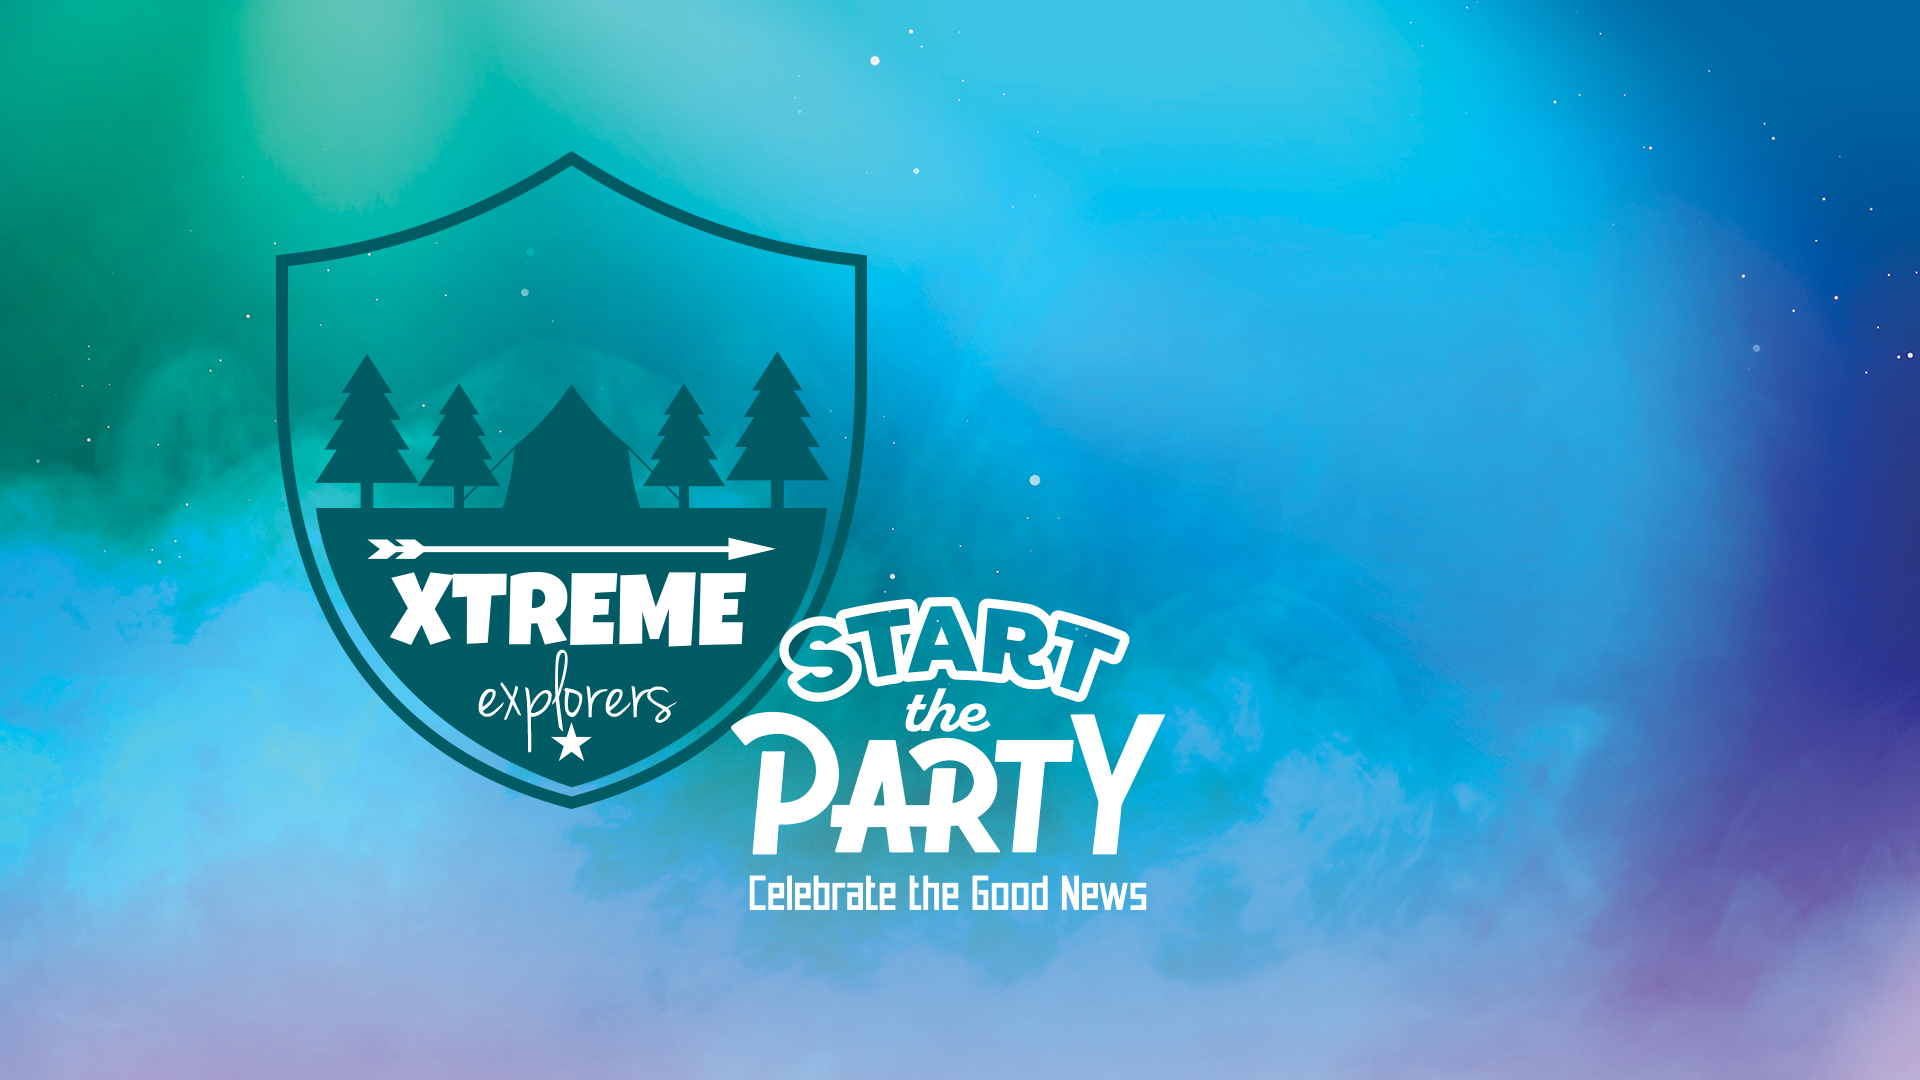 Xtreme Explorers

July 29 - August 1
9:00 - 11:30am
Grace Church
